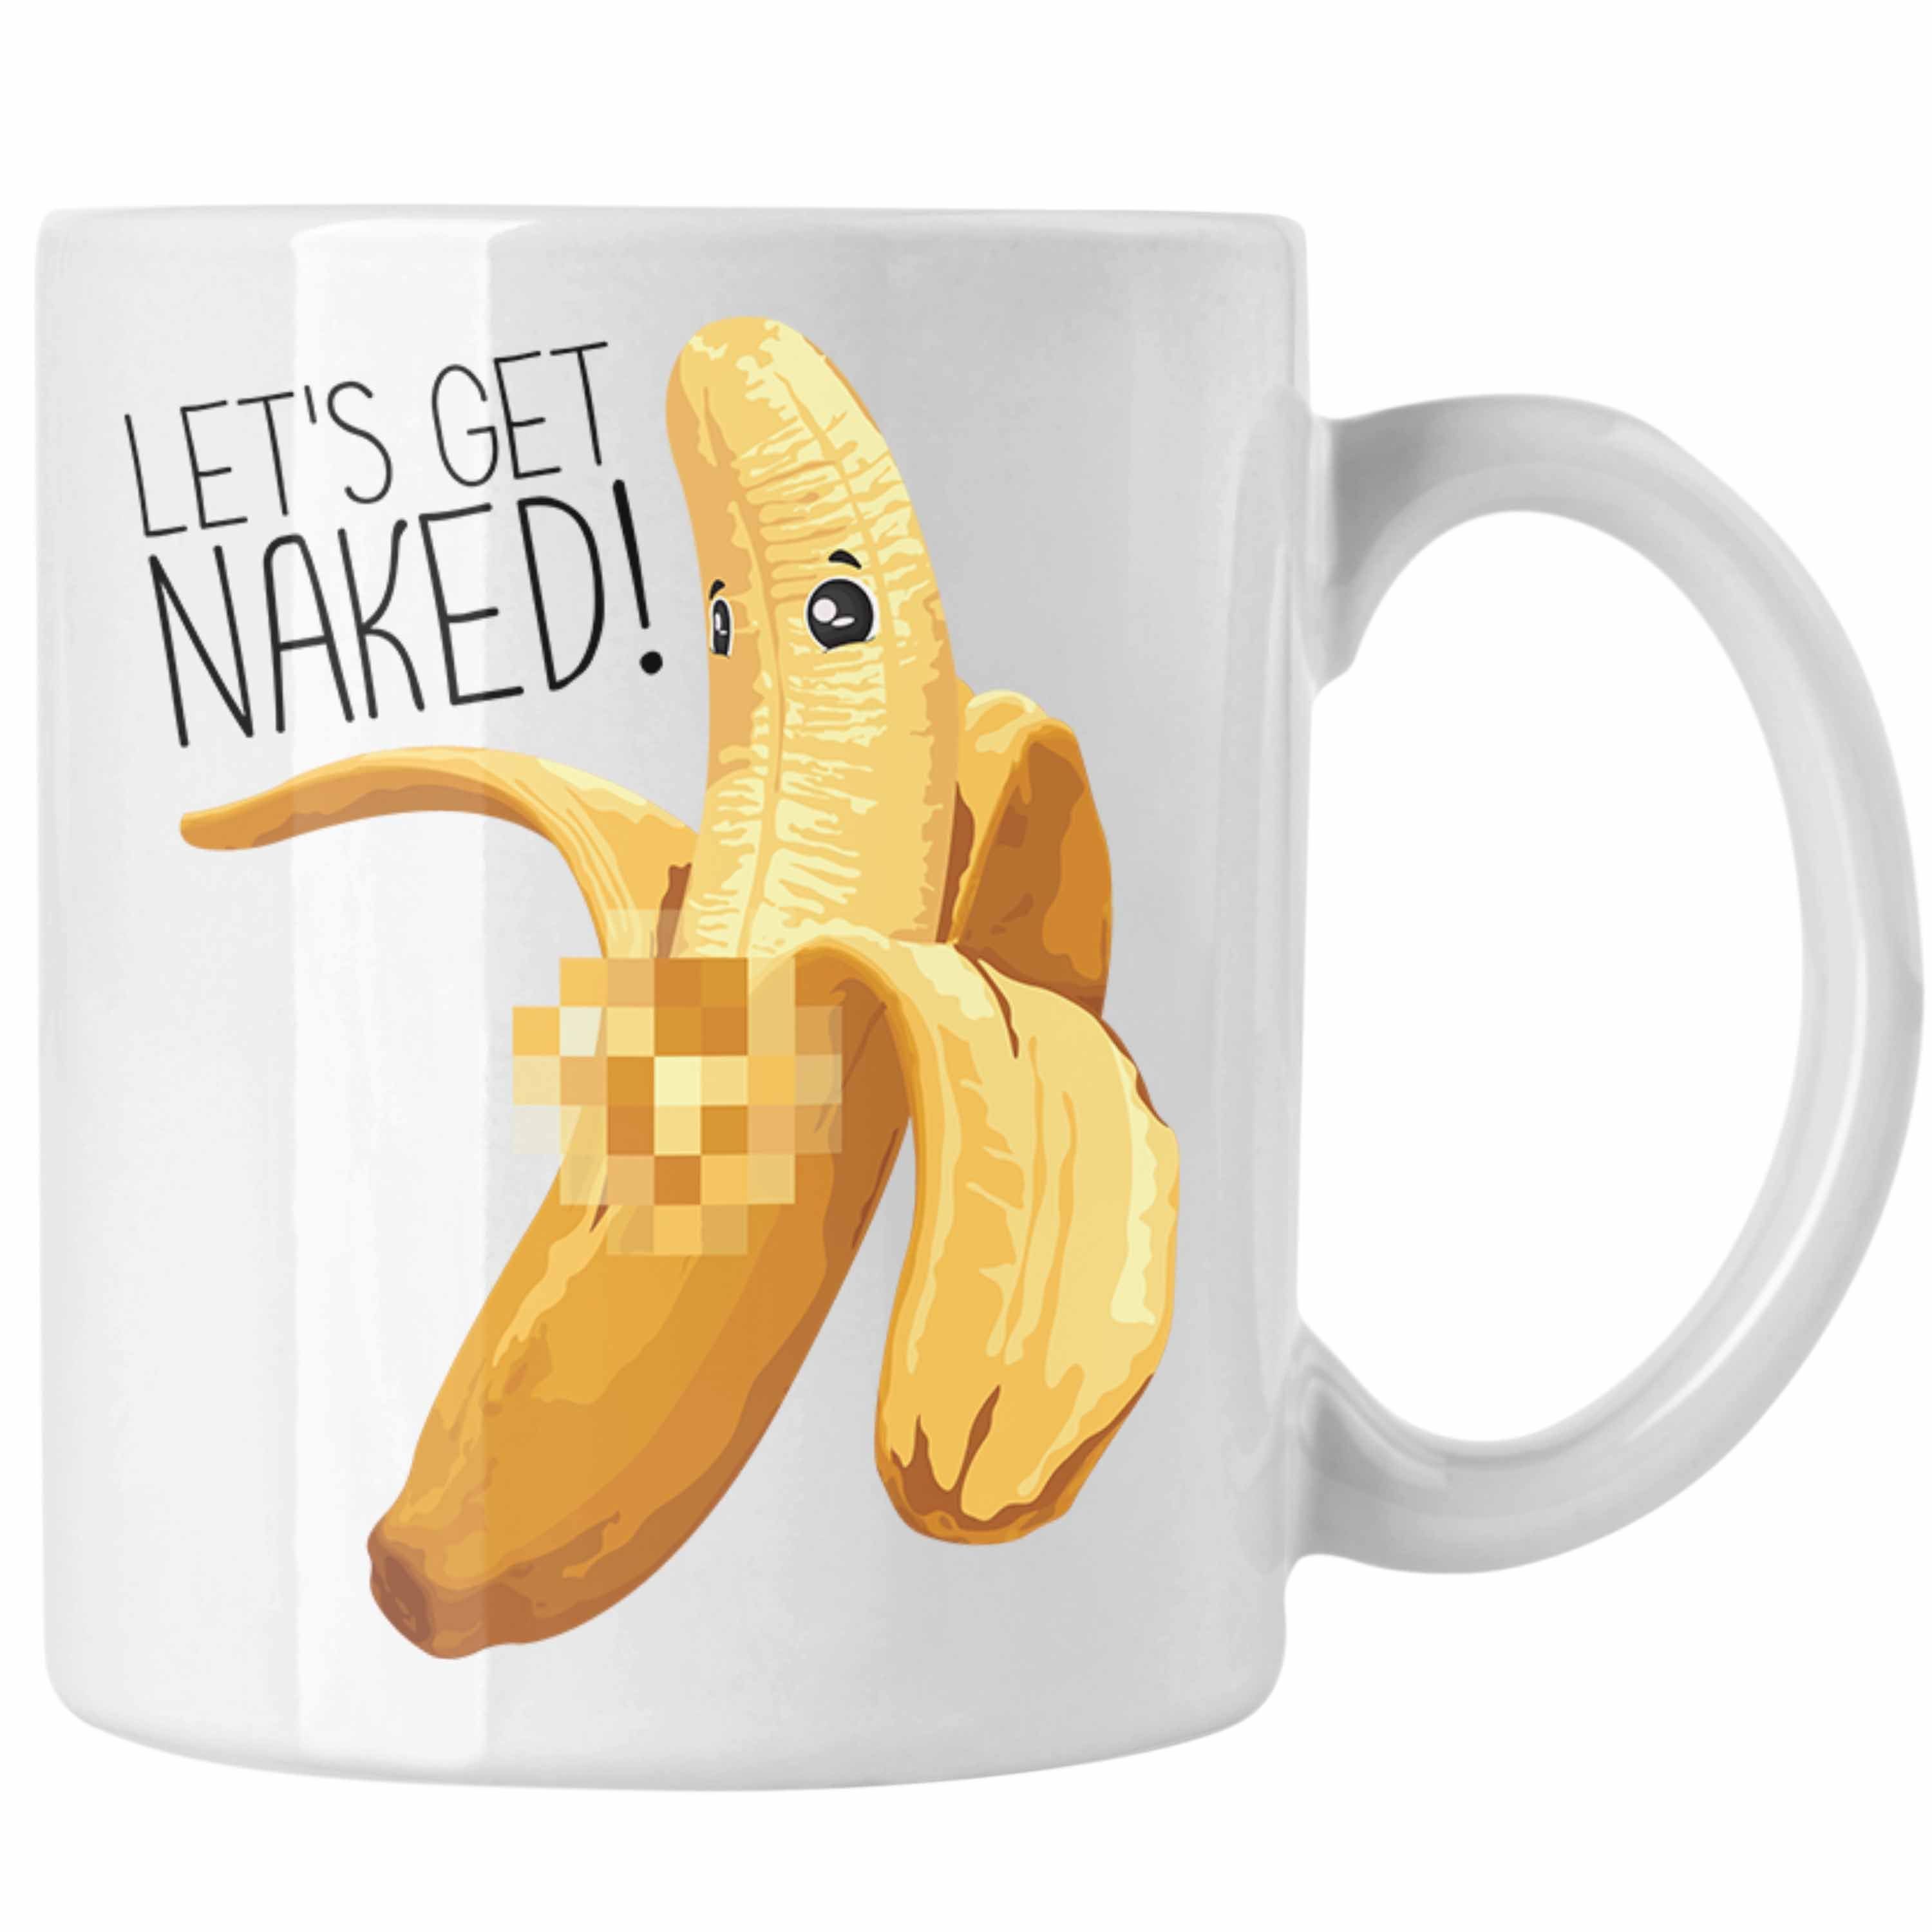 Trendation Weiss Tasse Erwachsener Geschenk Bech Naked Banane Humor Striptease Get Tasse Lets